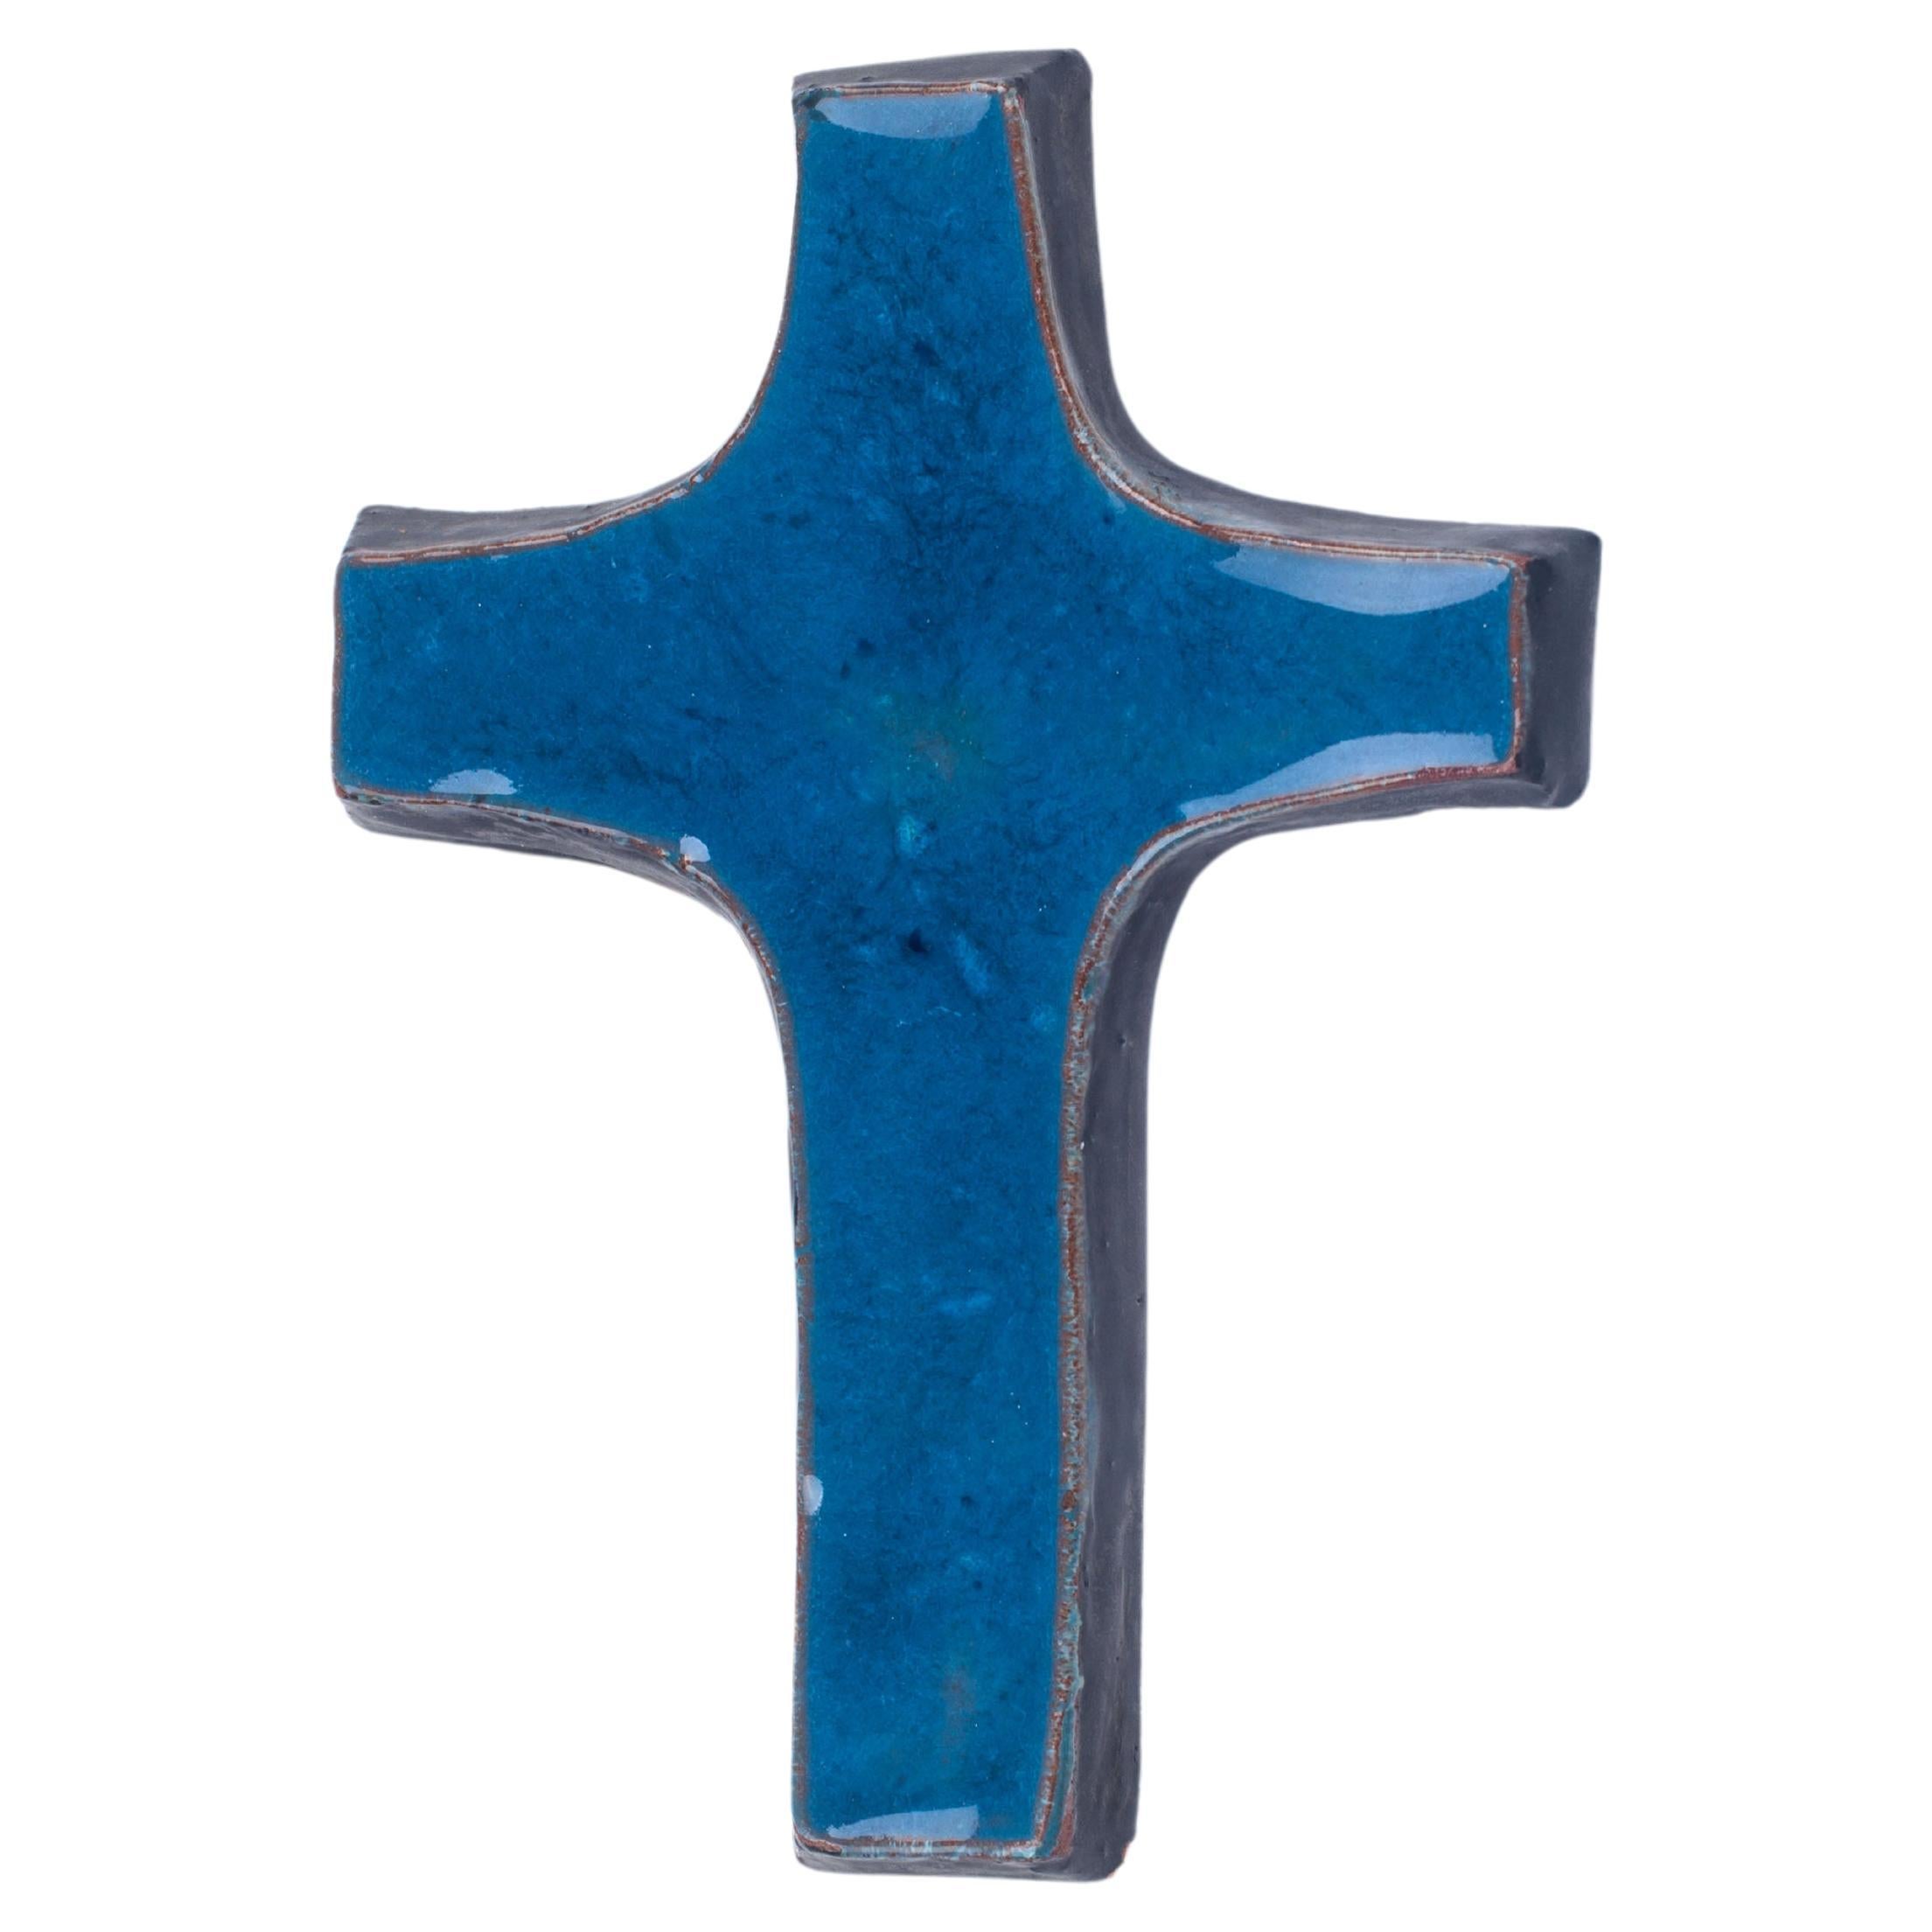 Midcentury European Blue Ceramic Cross, Multidimensional Depths of Blue 